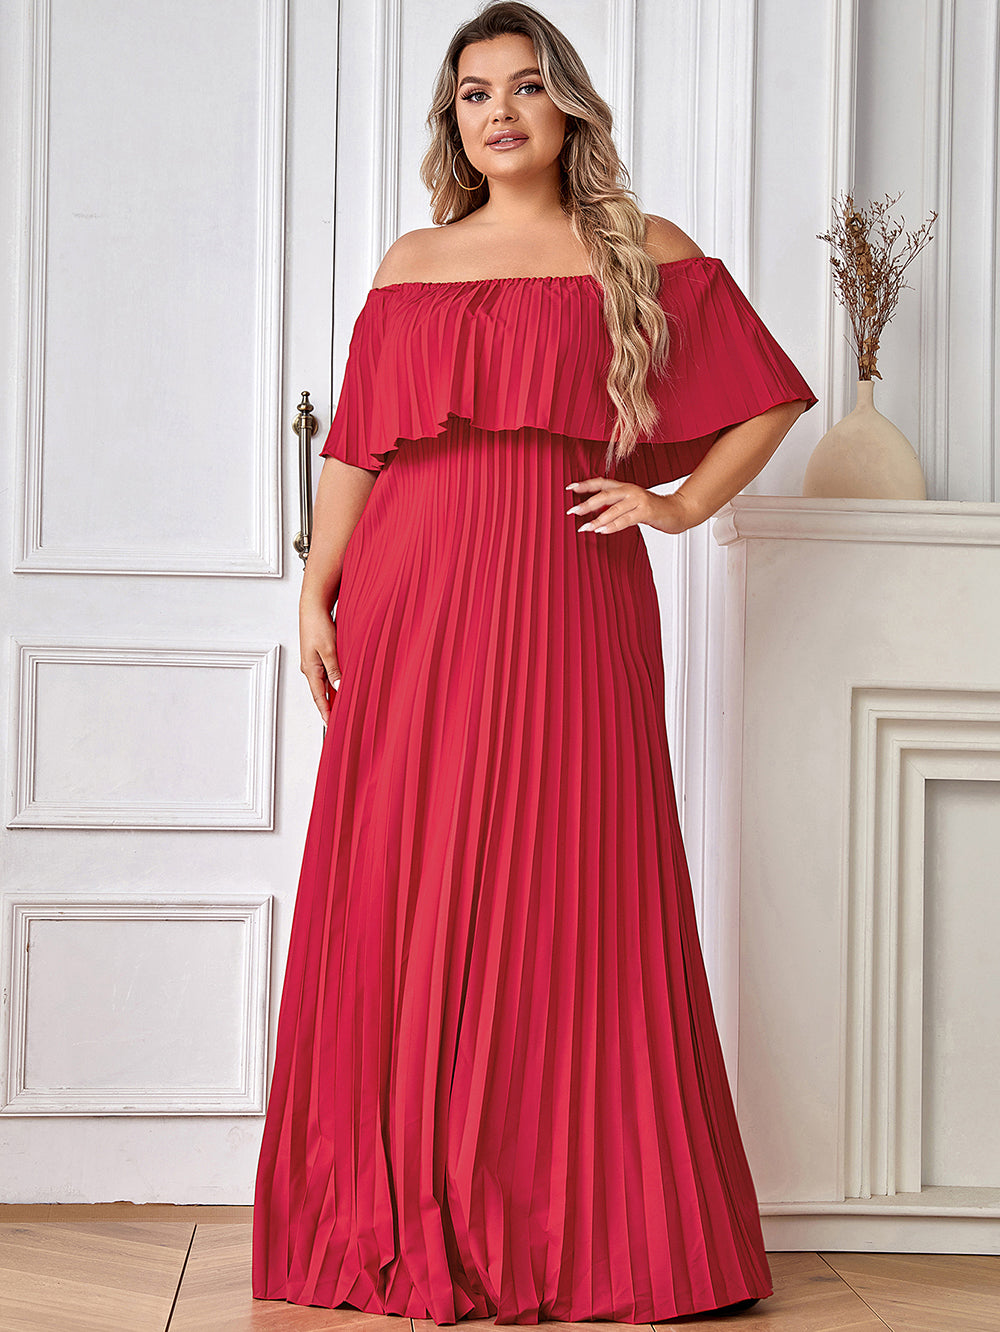 Red Bodycon Dress HB78130